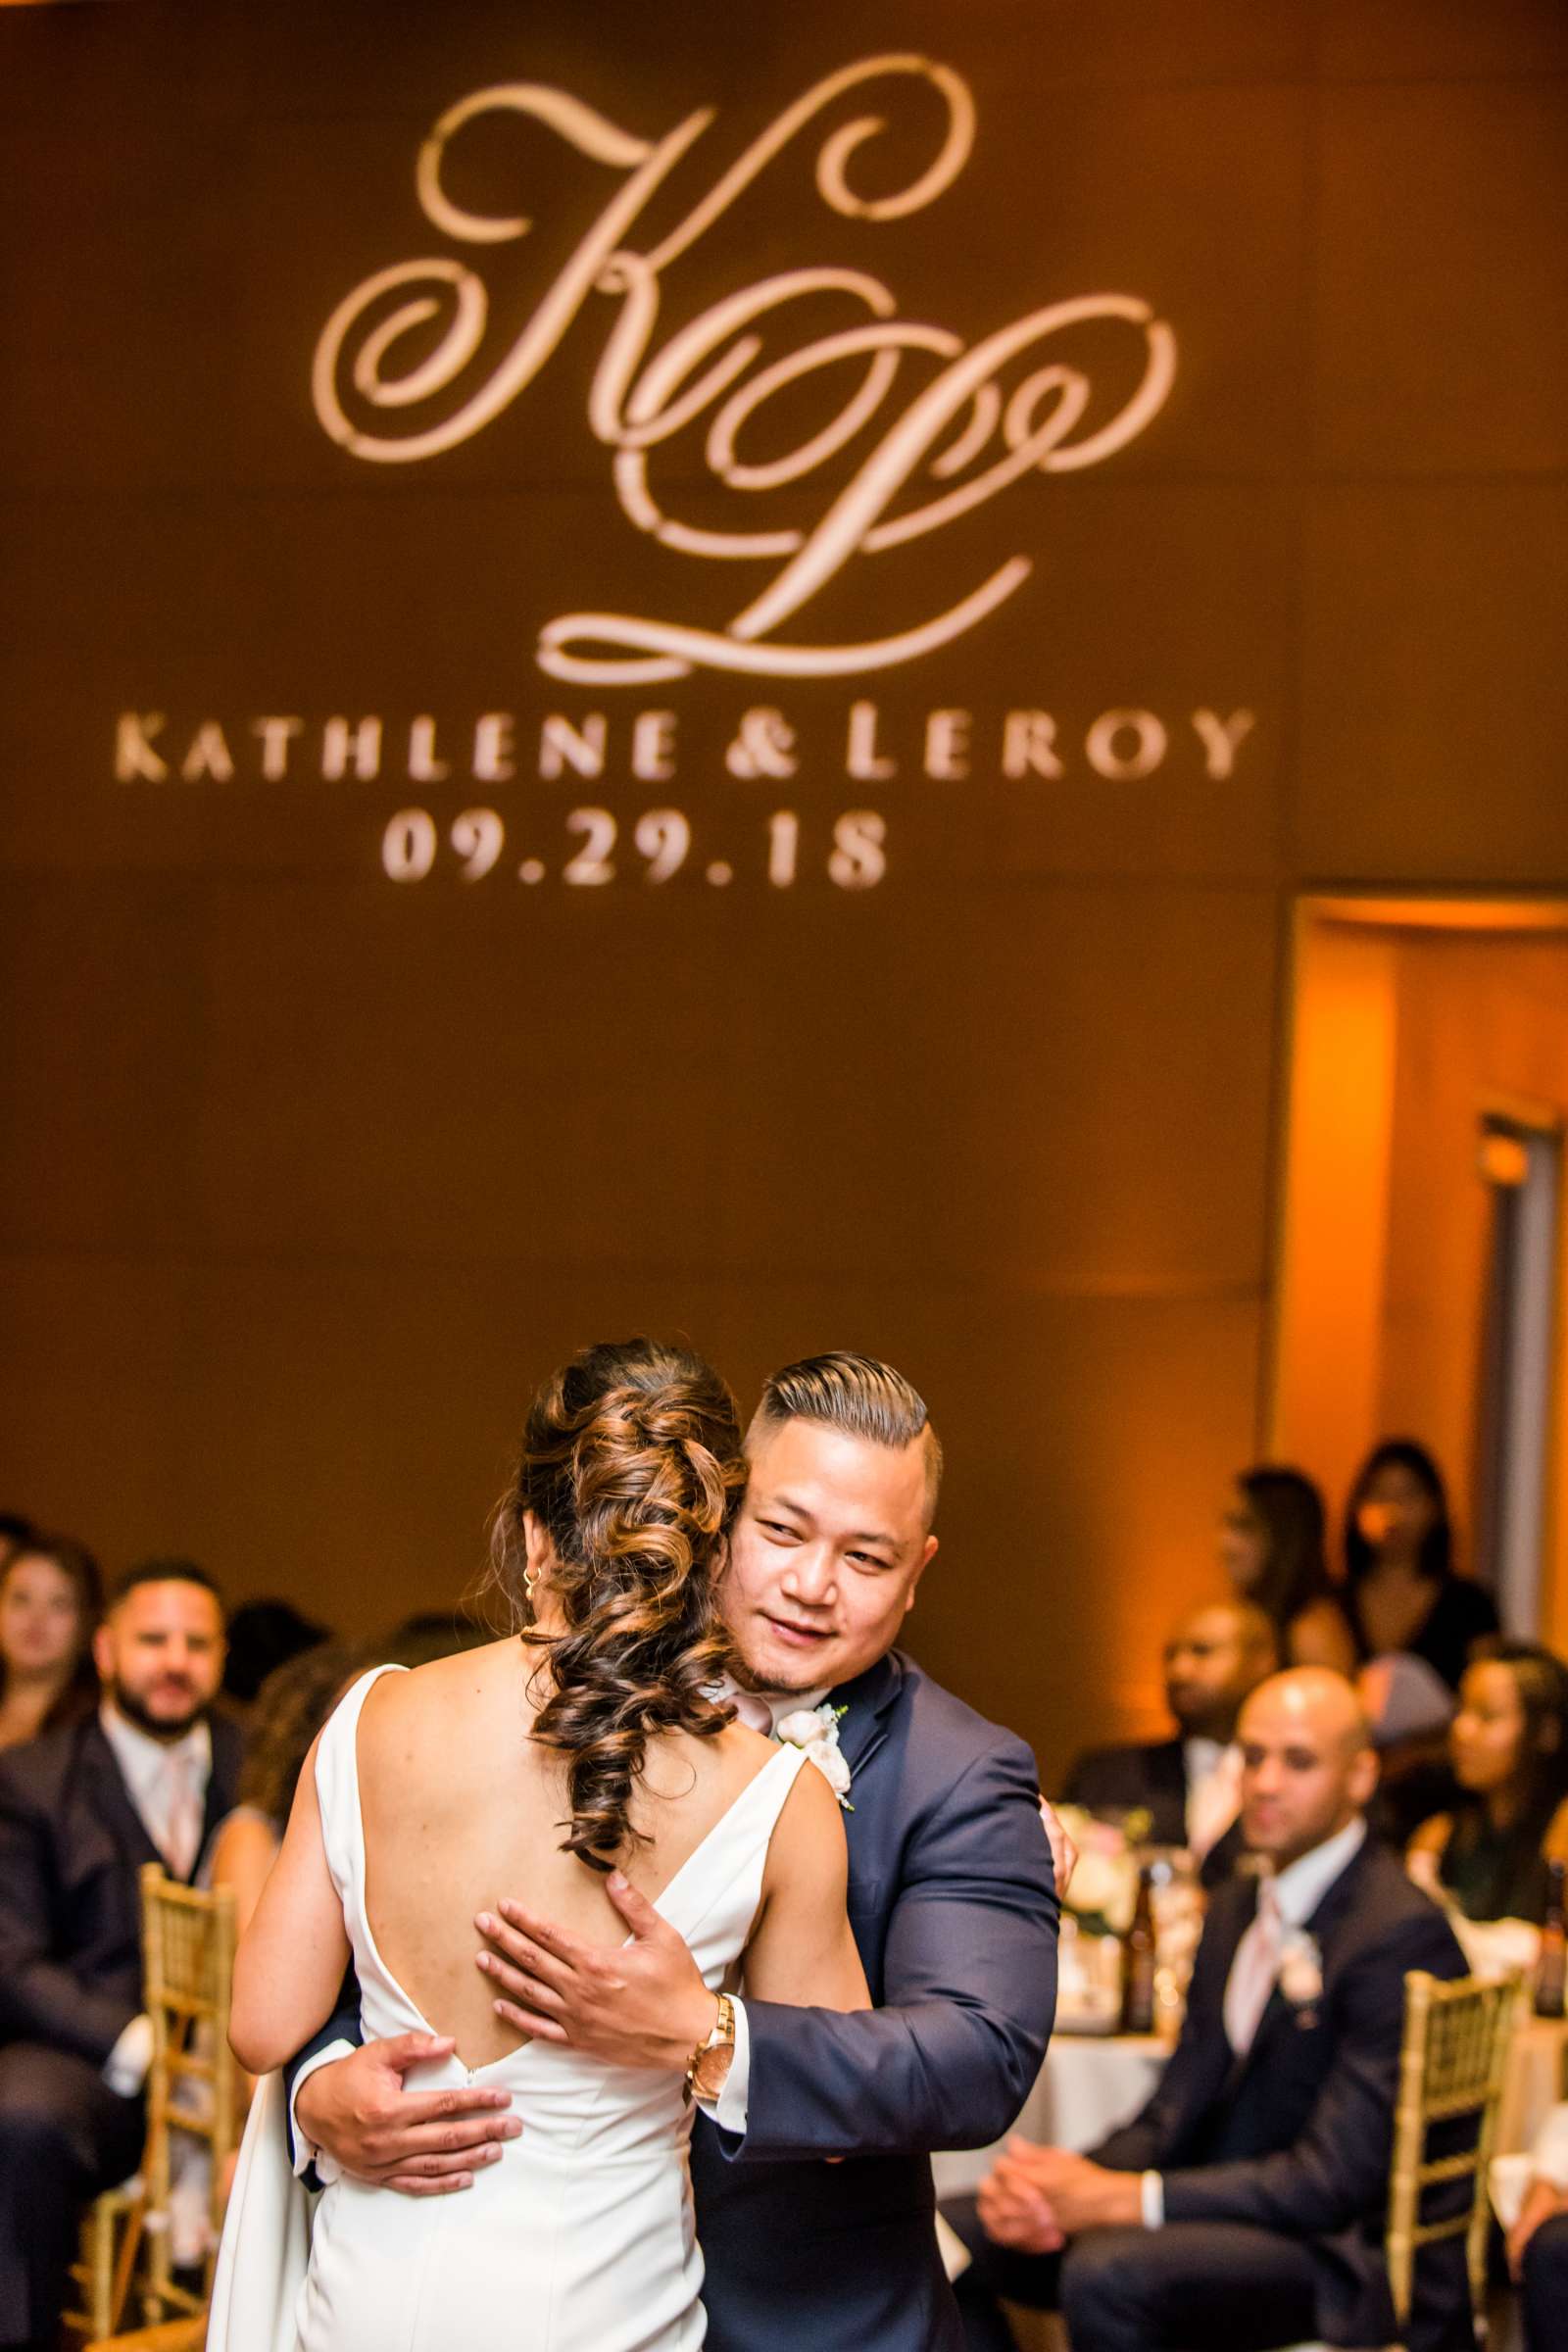 The Ultimate Skybox Wedding, Kathlene and Leroy Wedding Photo #89 by True Photography